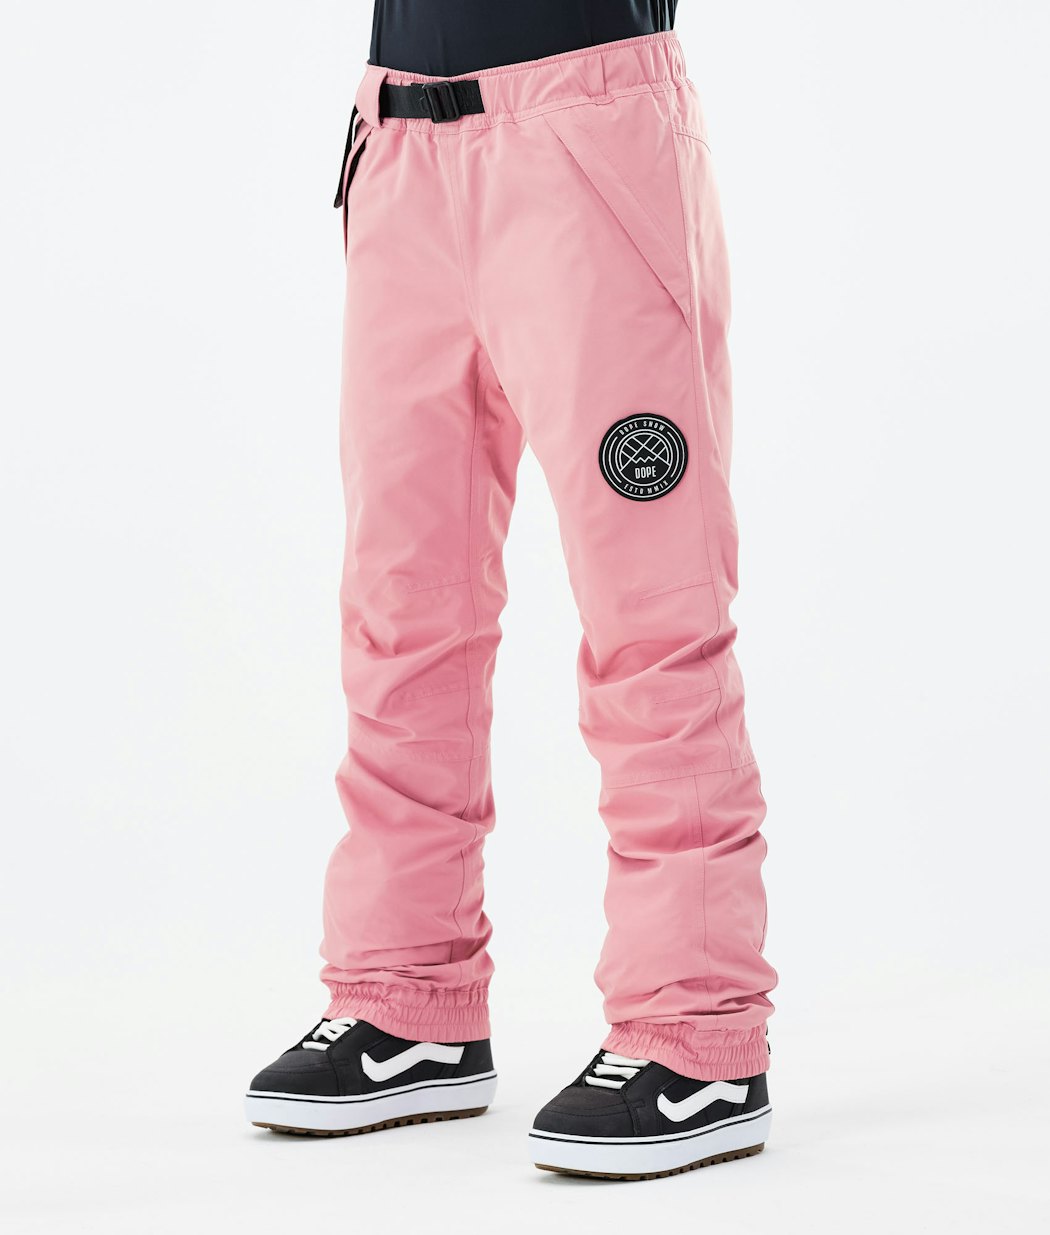 Blizzard W 2021 Snowboard Pants Women Pink